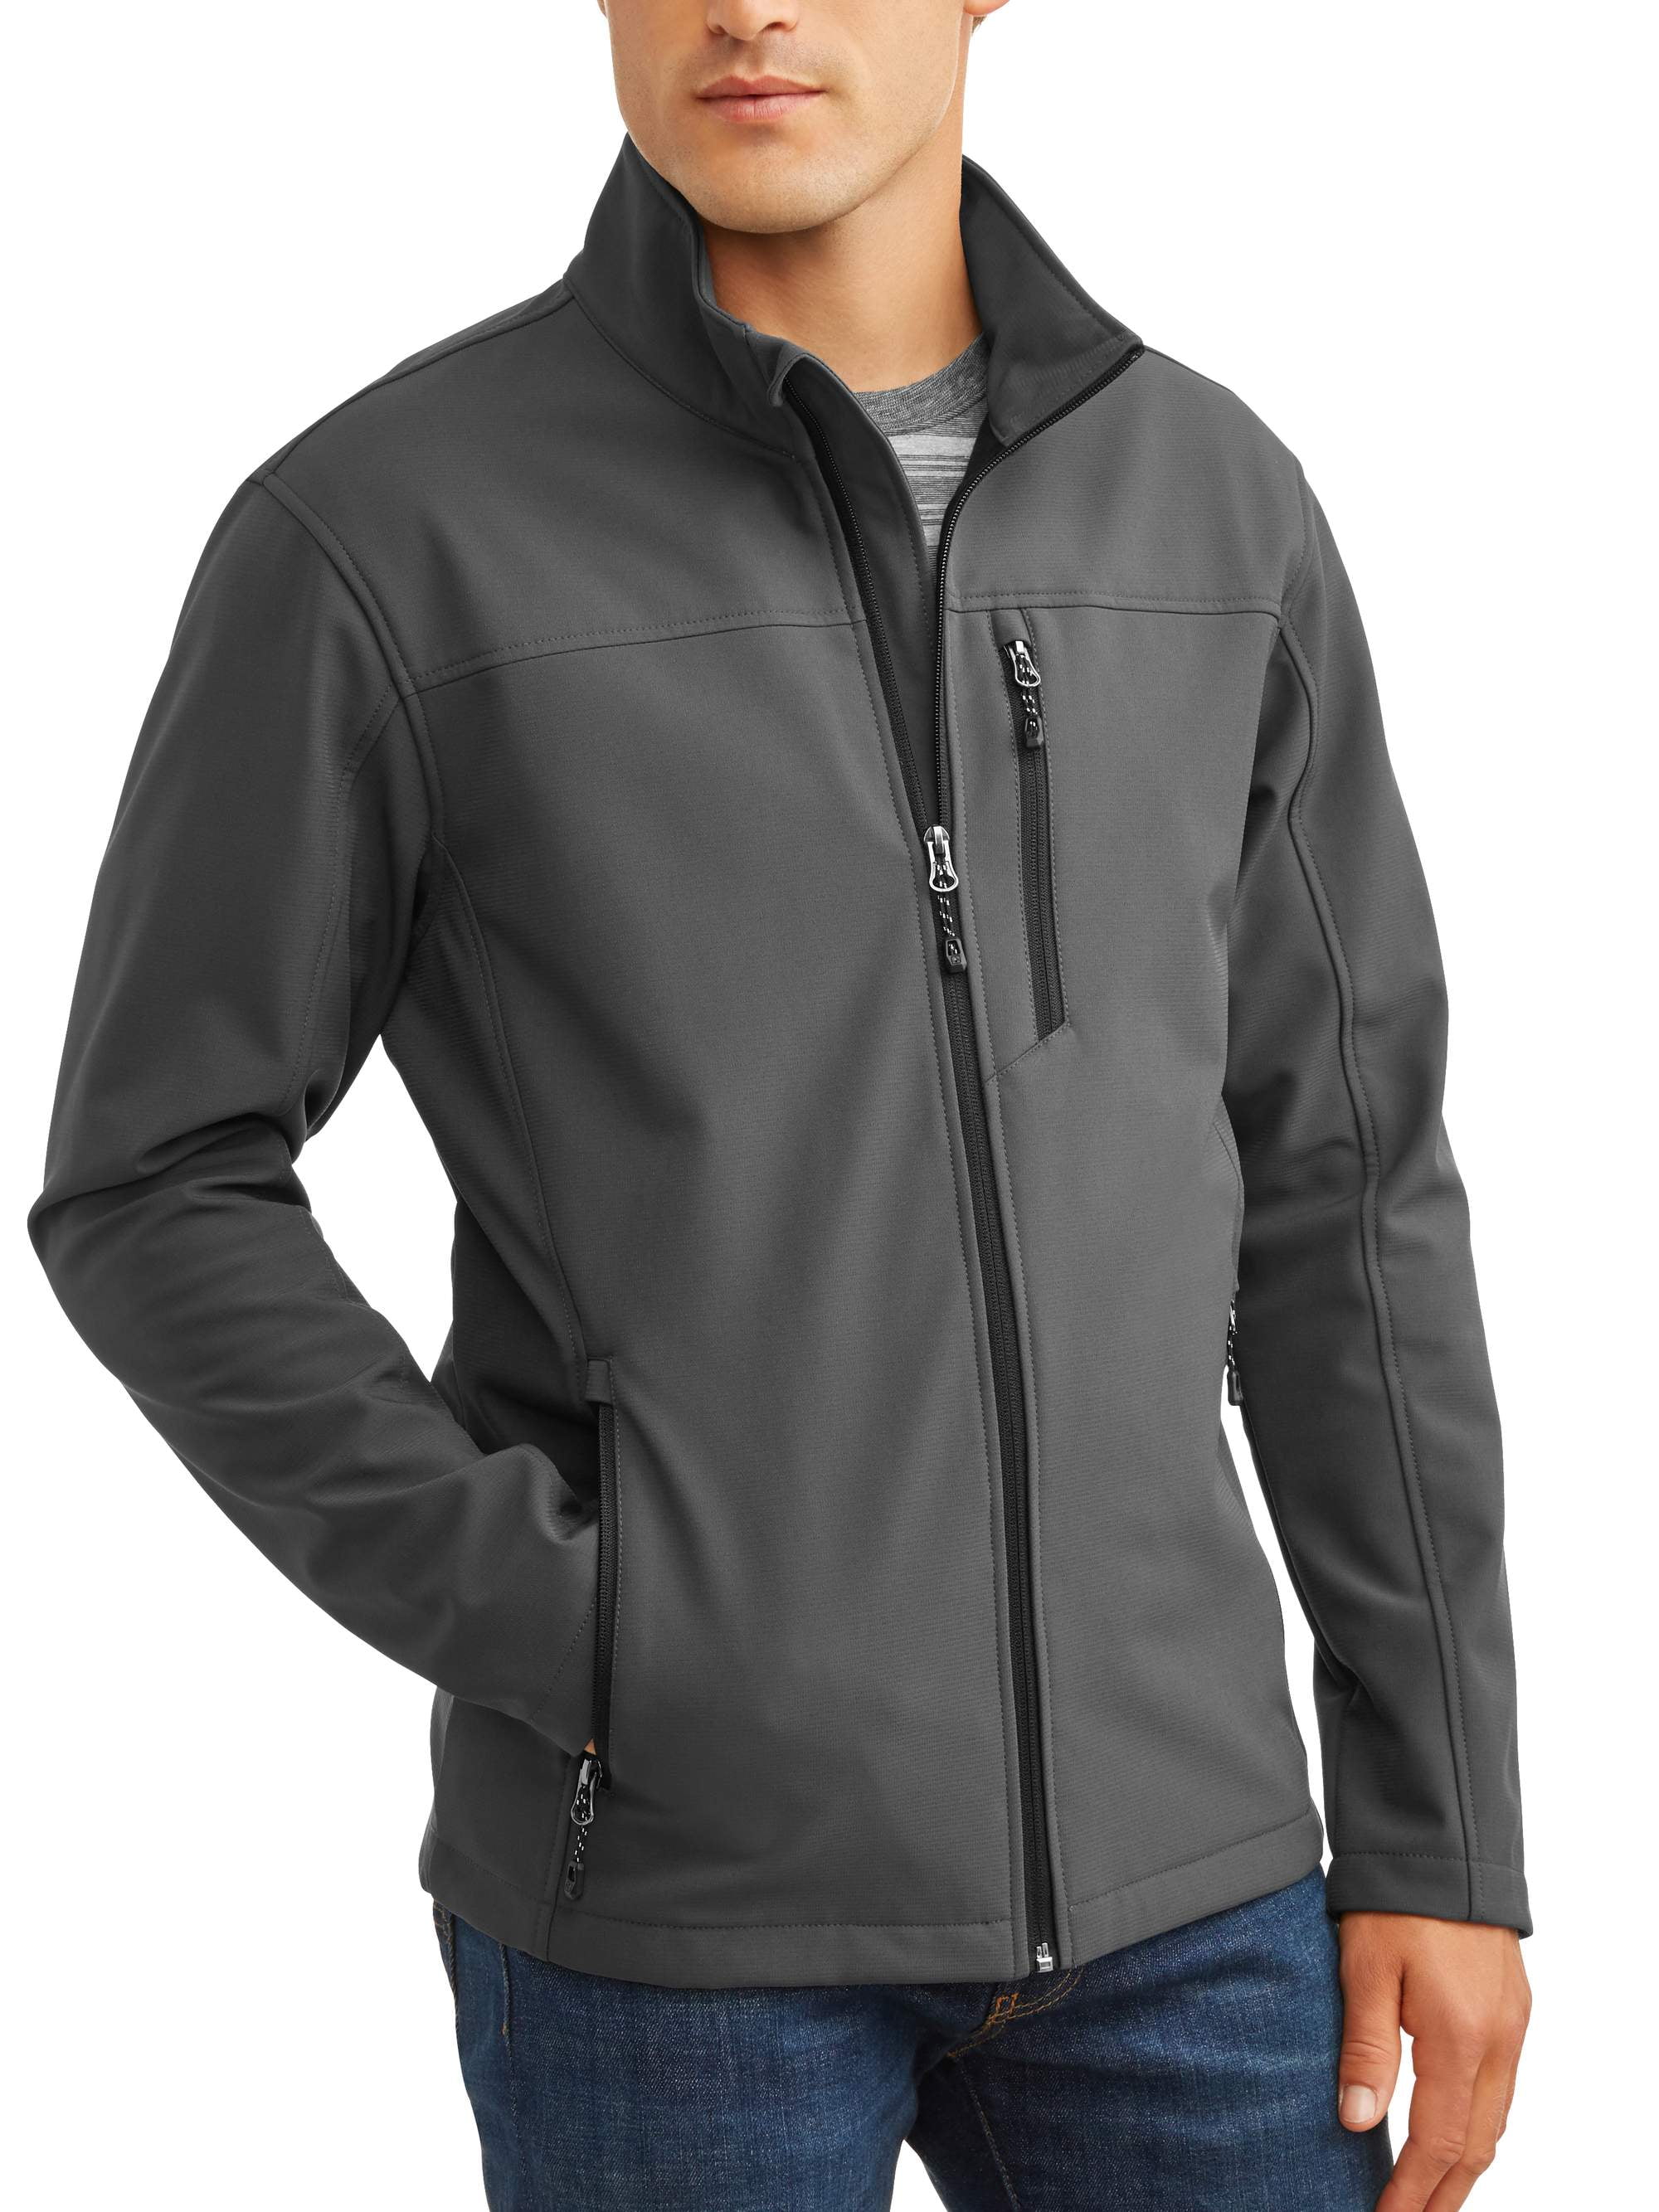 SwissTech Men's Softshell Jacket Up To Size 5Xl - Walmart.com